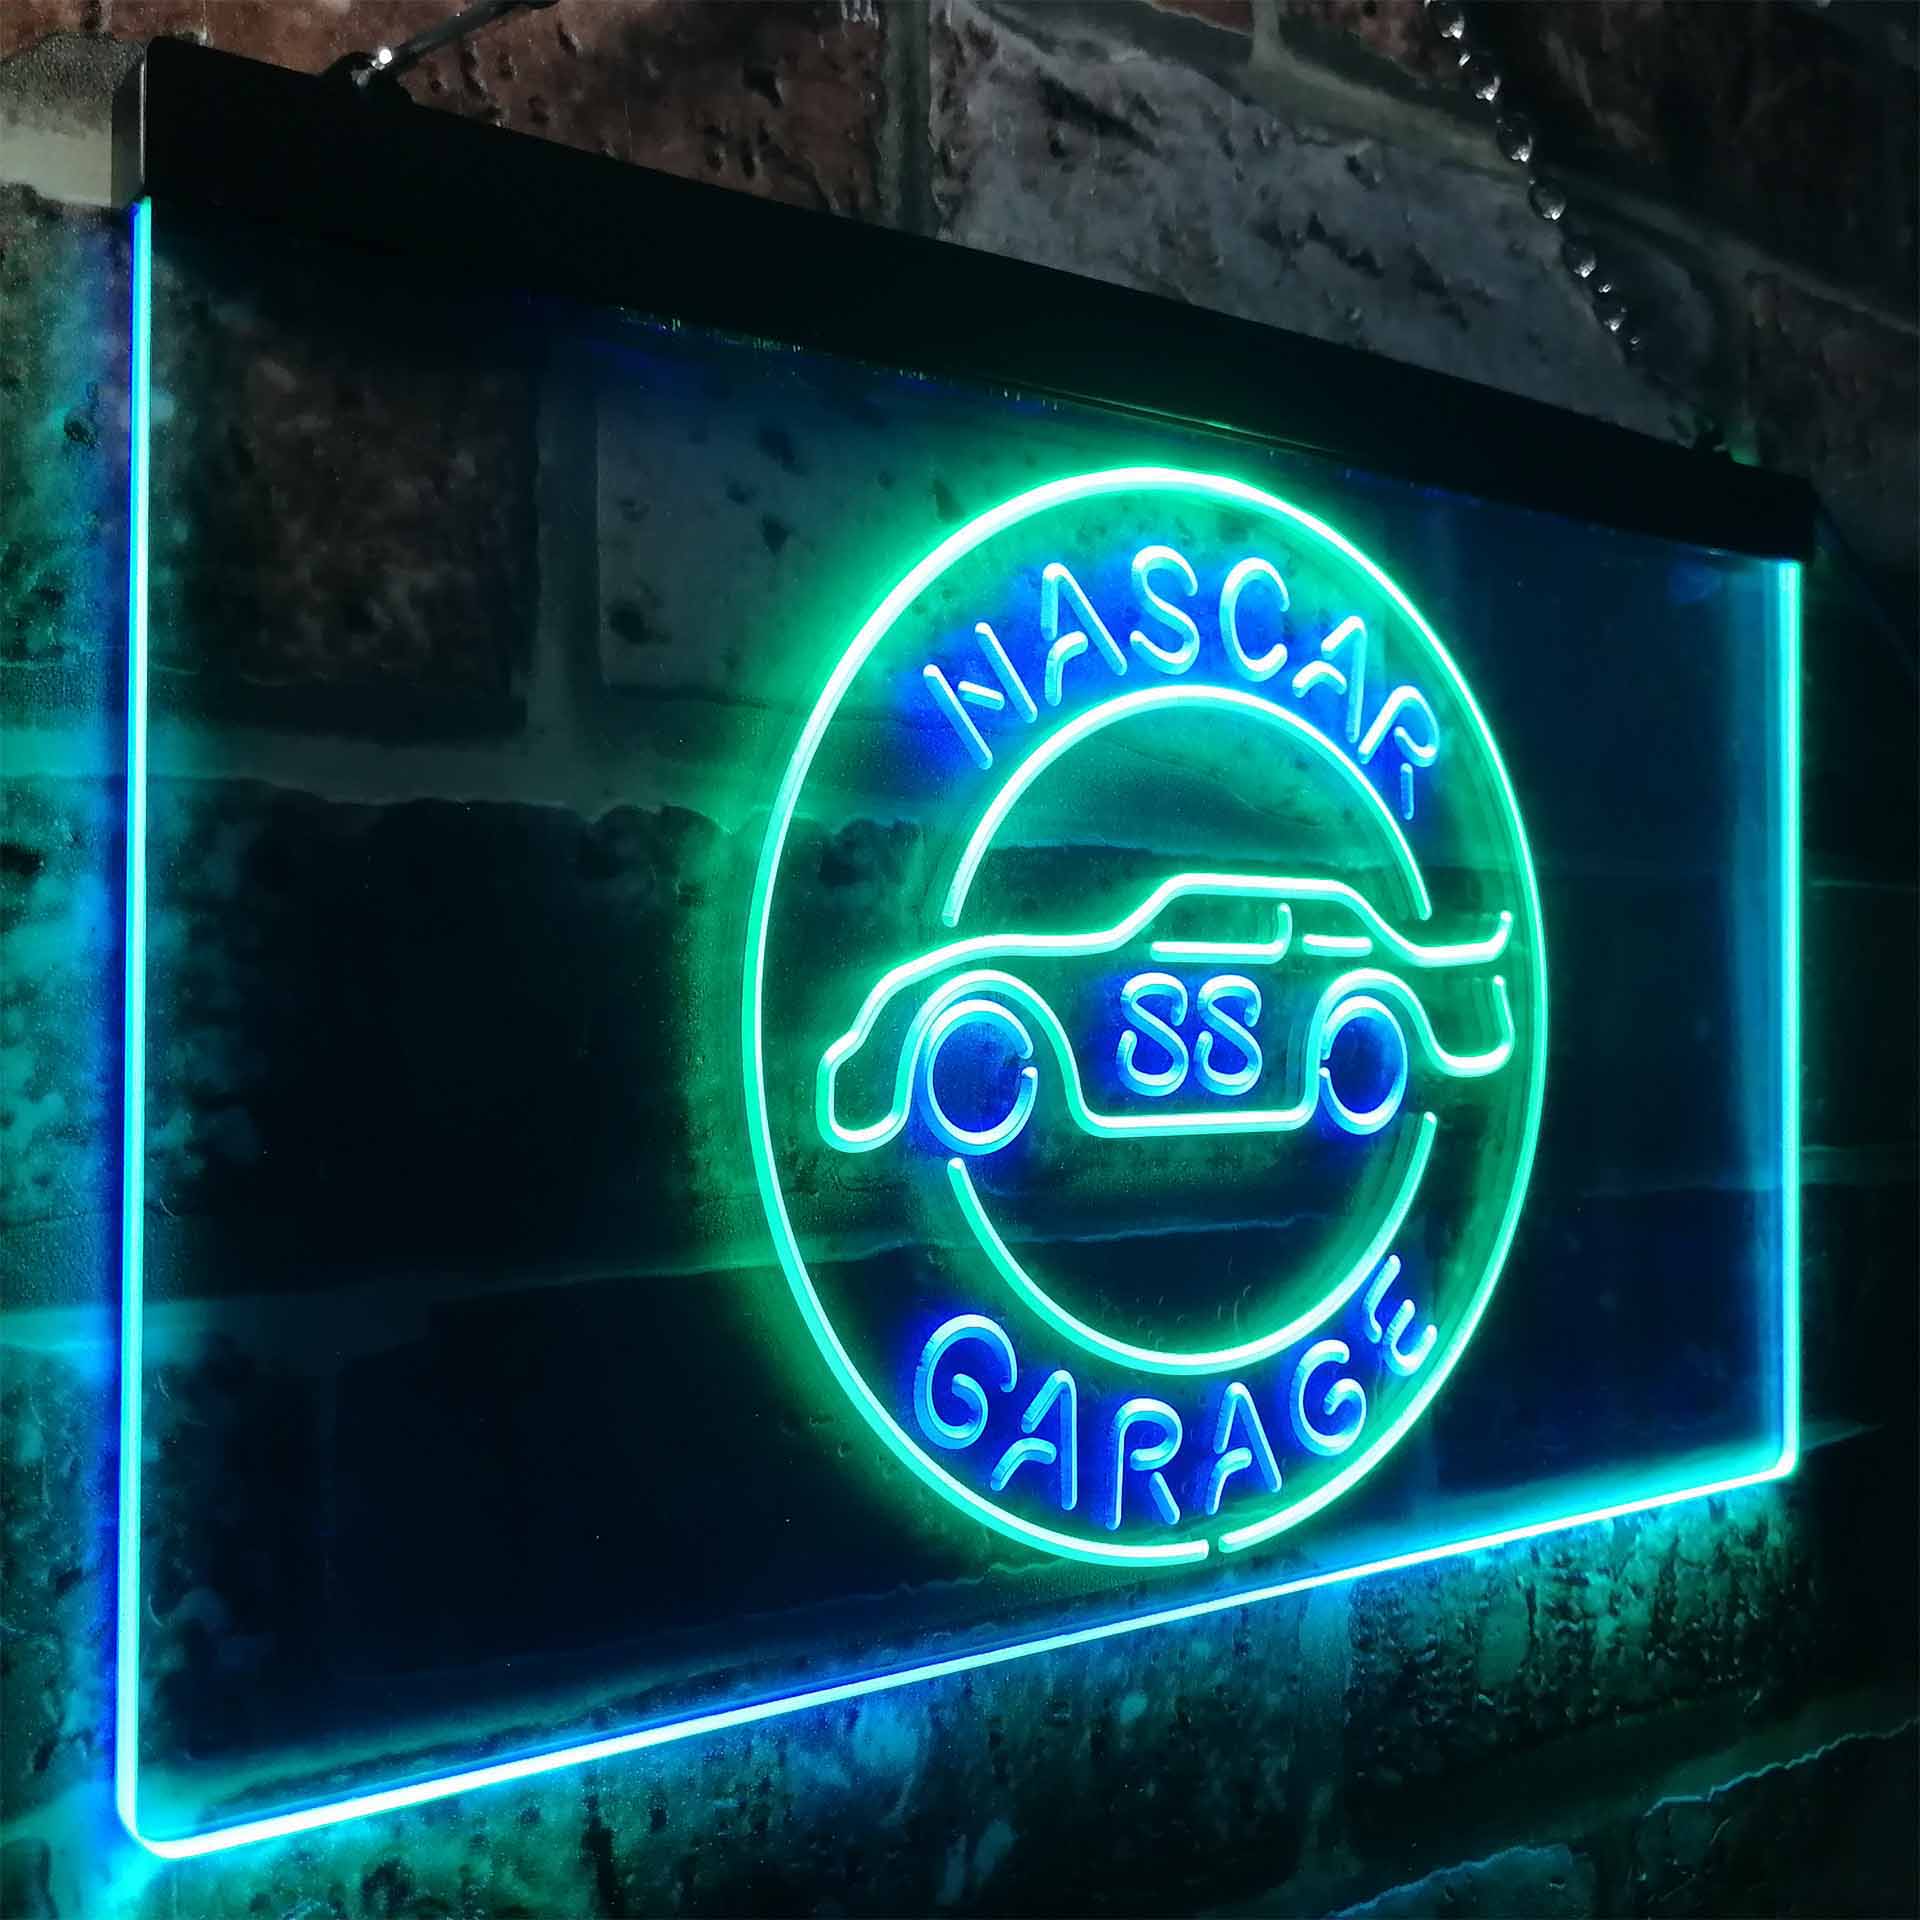 Nascar 88 Garage Dale Jr. League Club Neon Light Up Sign Wall Decor